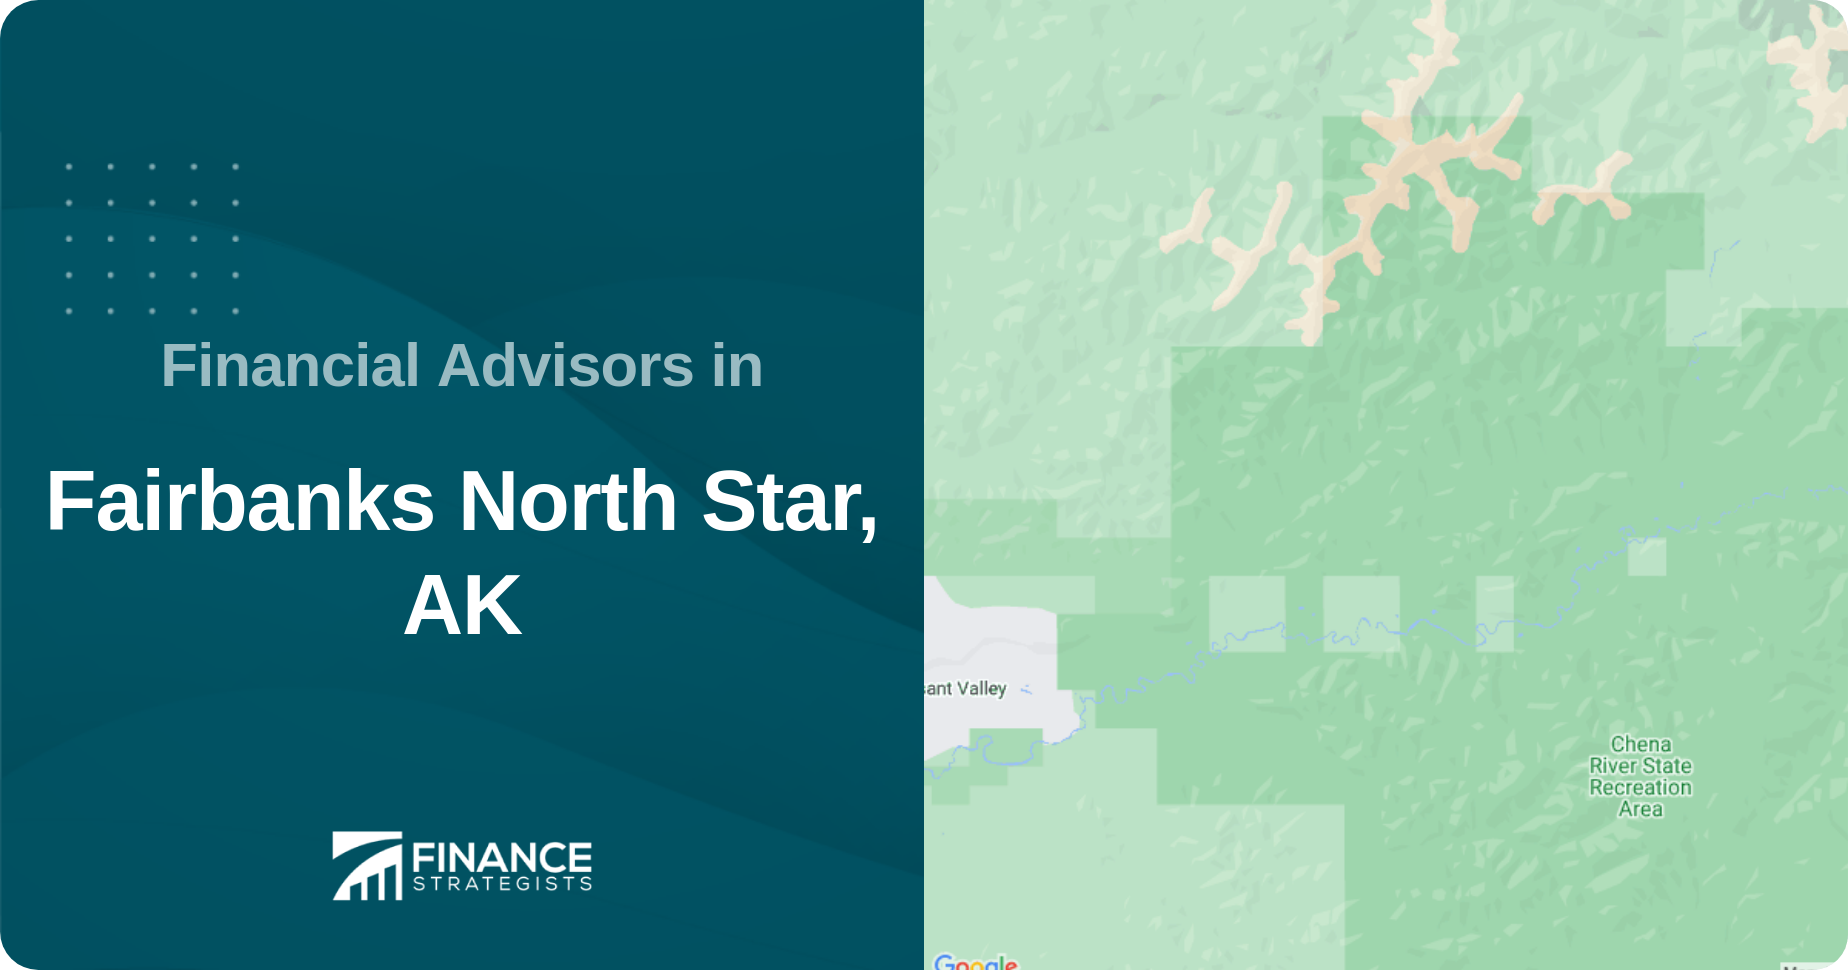 Financial Advisors in Fairbanks North Star, AK